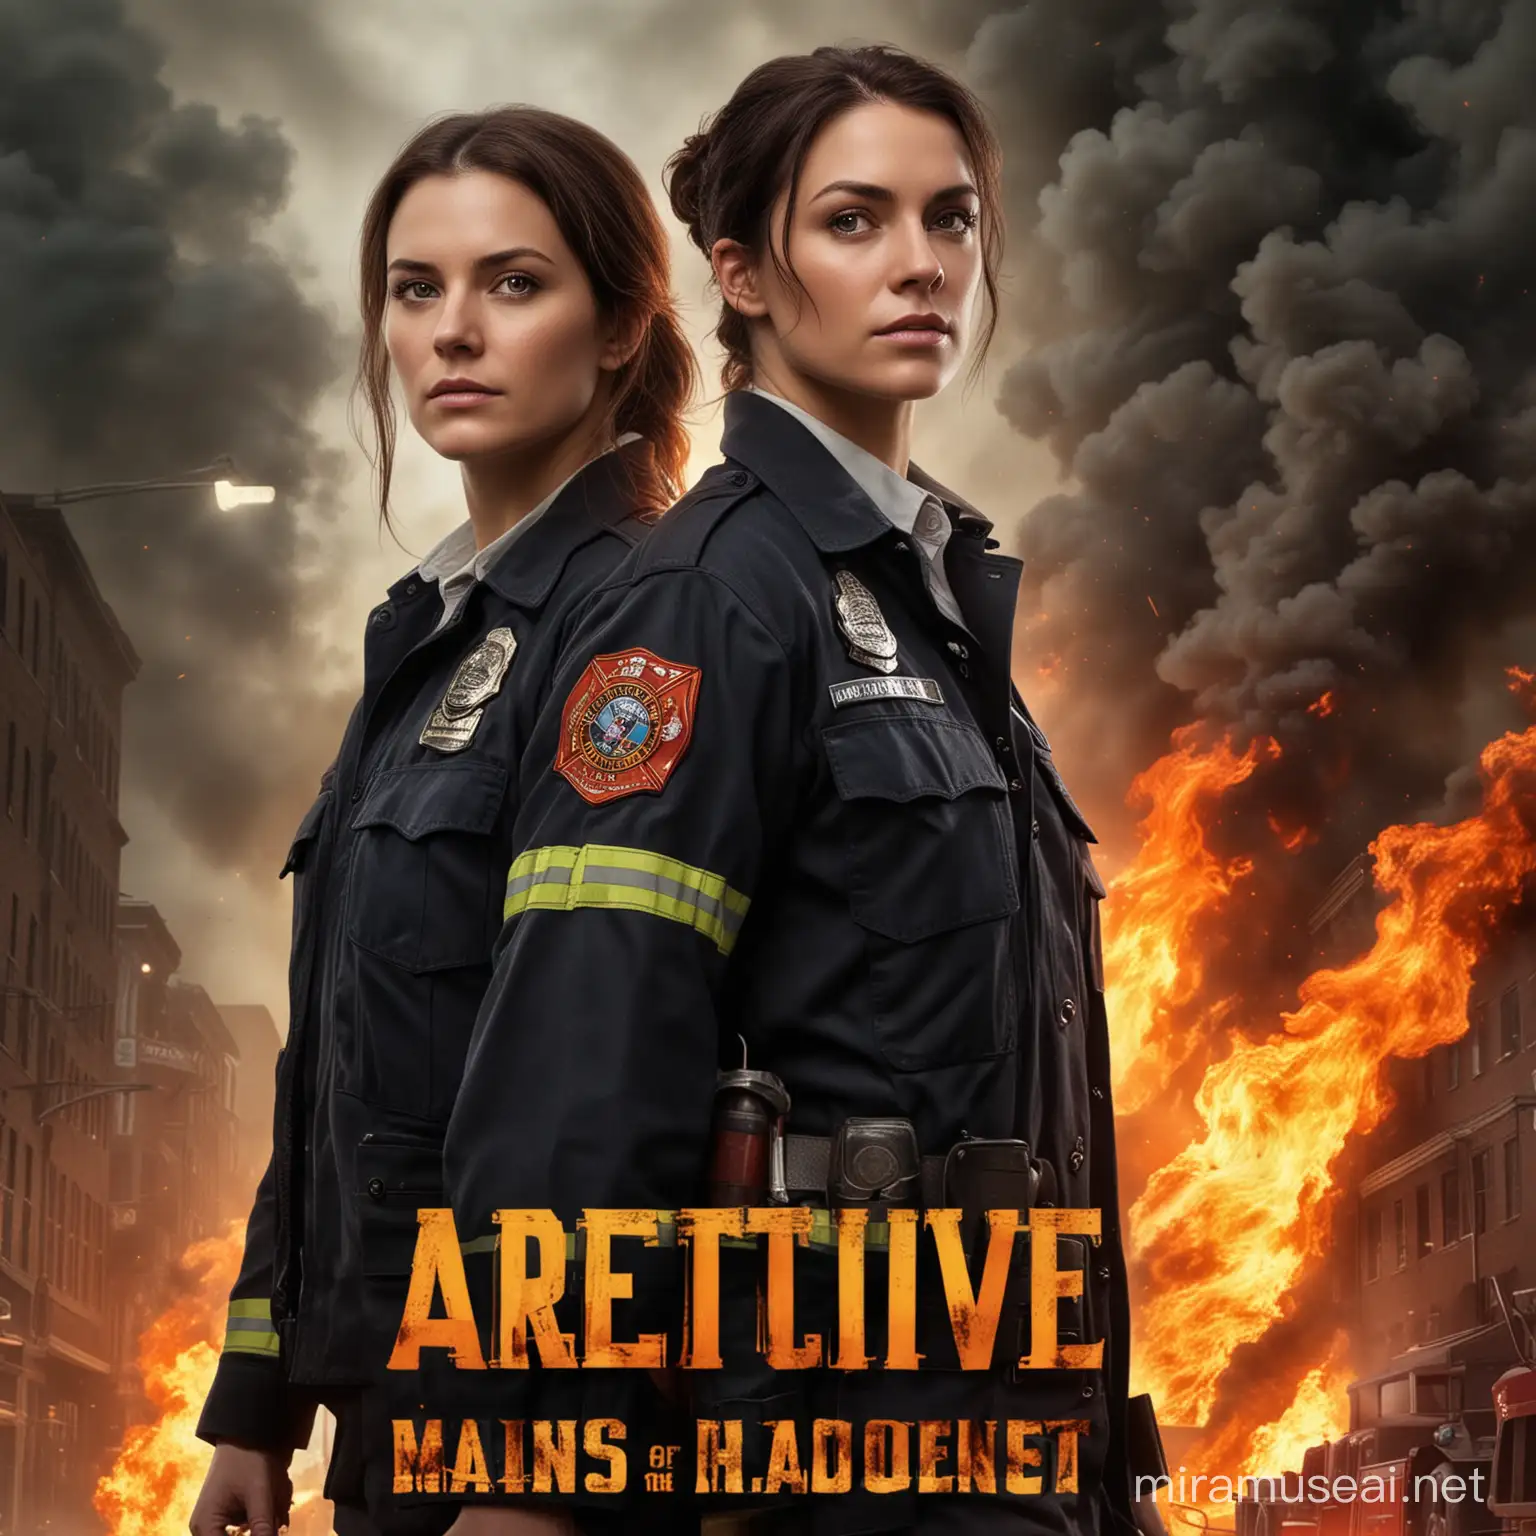 Lesbian Thriller Detective and Fire Captain Unite Against Arson